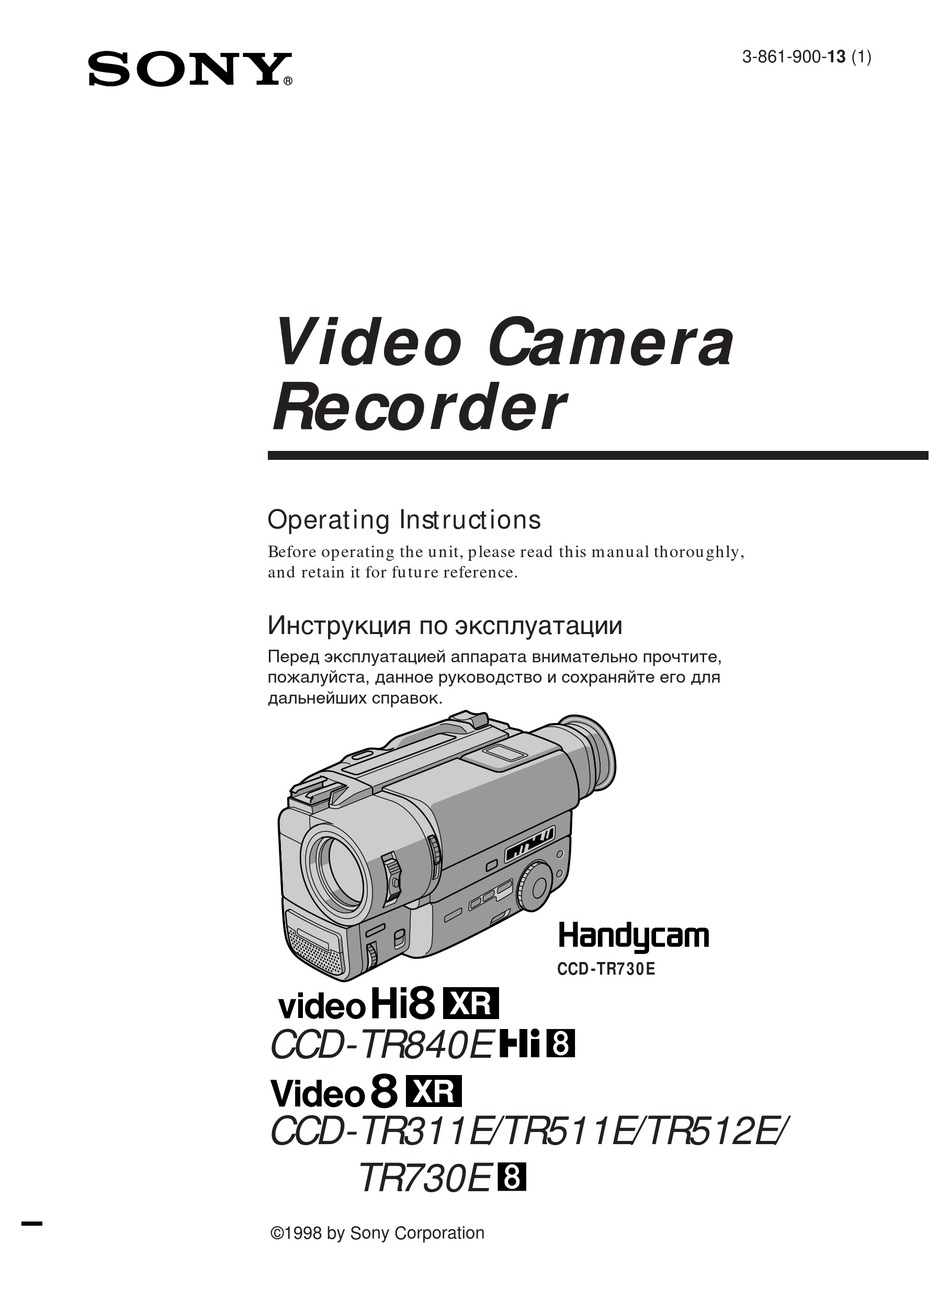 ccd s820 camera manual